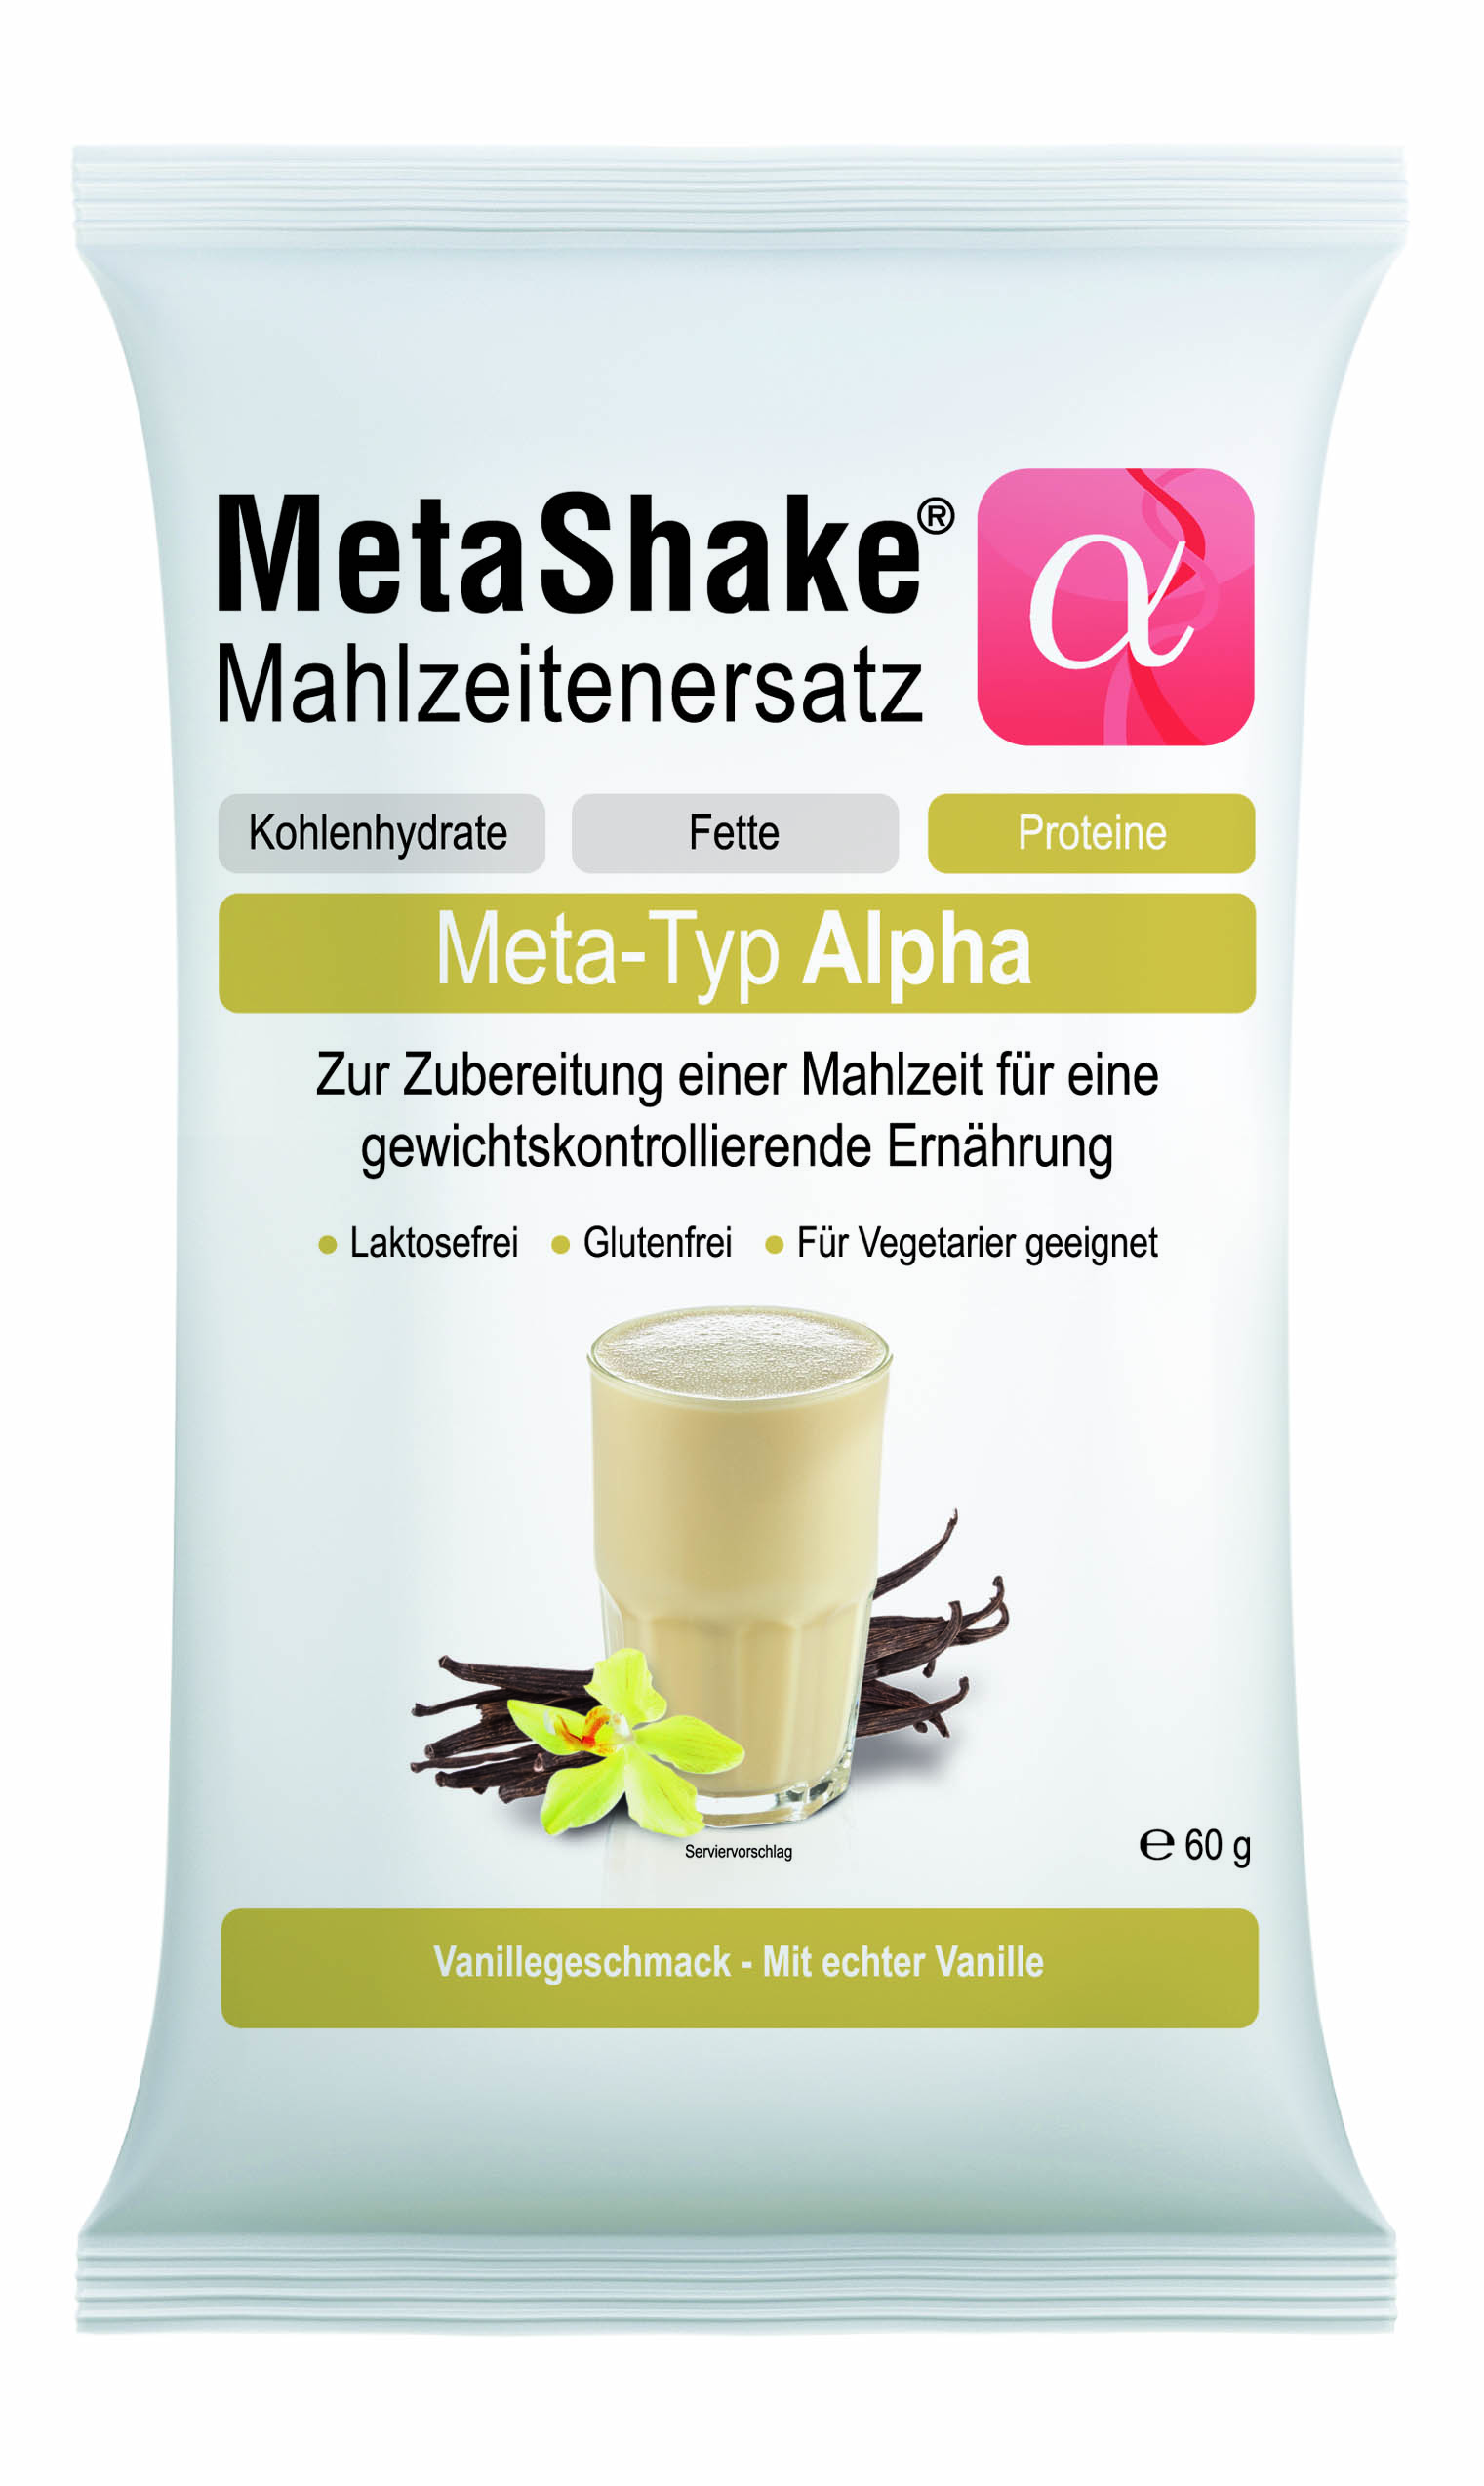 Produktbild MetaShake Mahlzeitenersatz Meta-Typ: ALPHA, 7 x 60 g